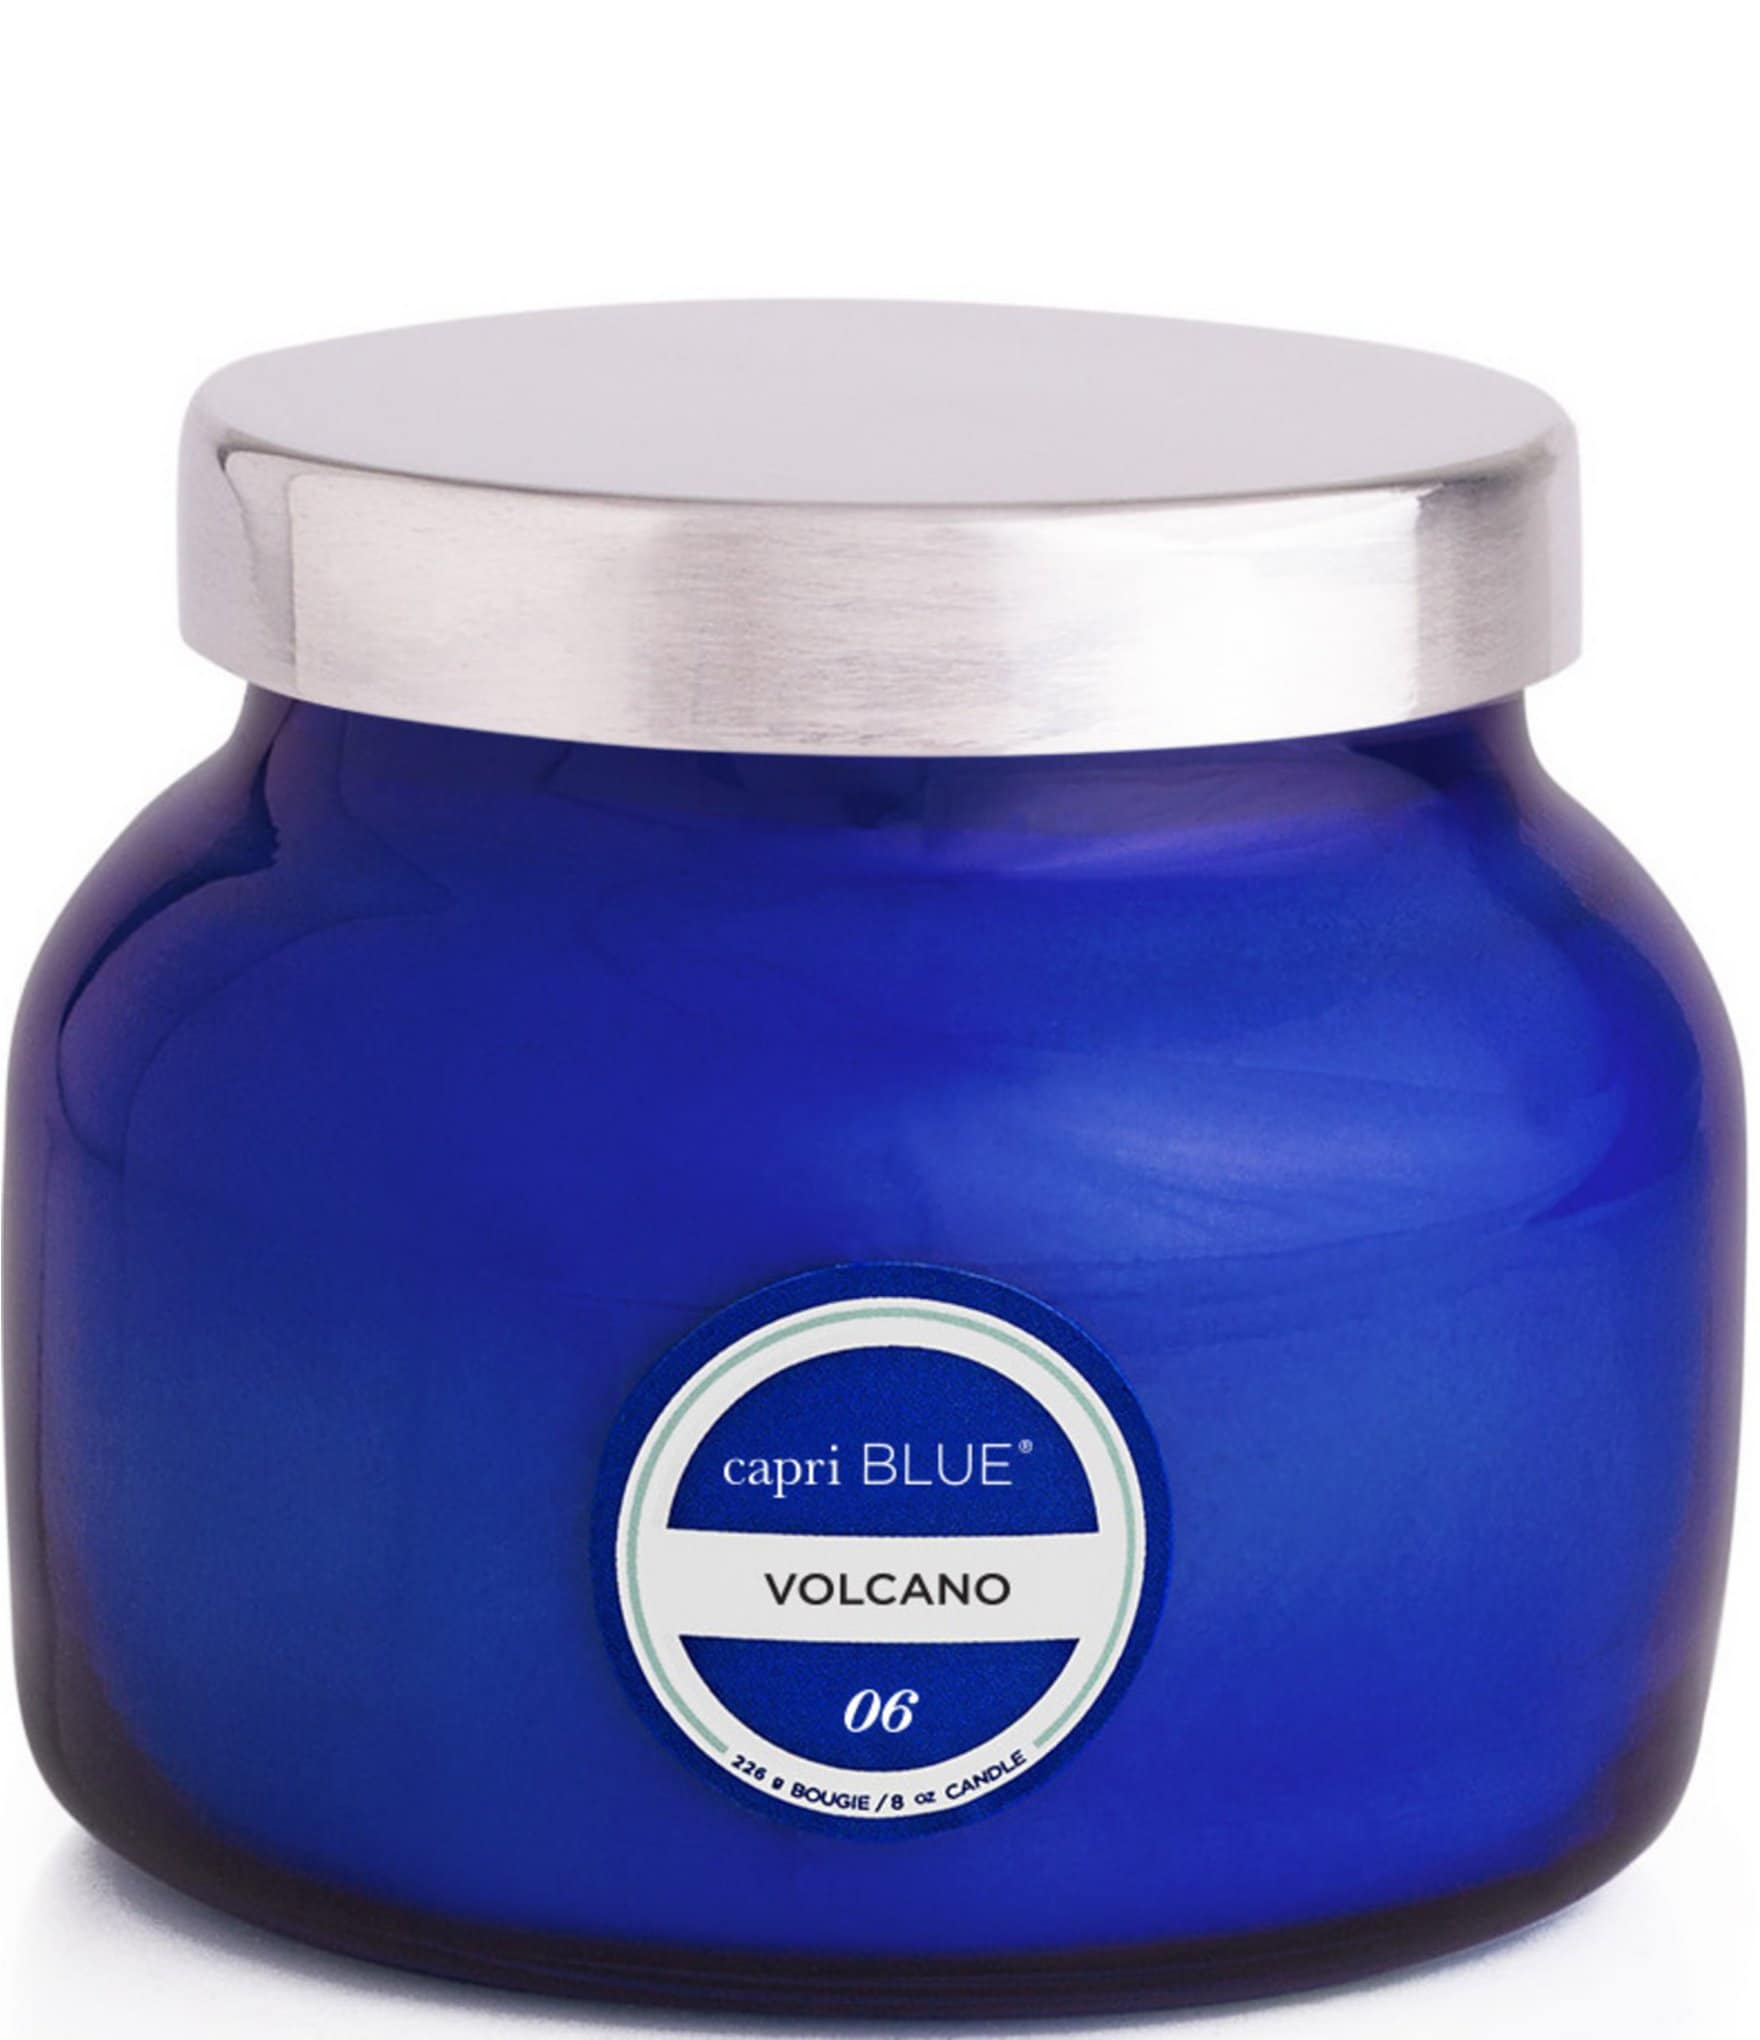 Capri Blue Candles Volcano Scent Petite Signature Jar 8 oz 4 Colors Available 